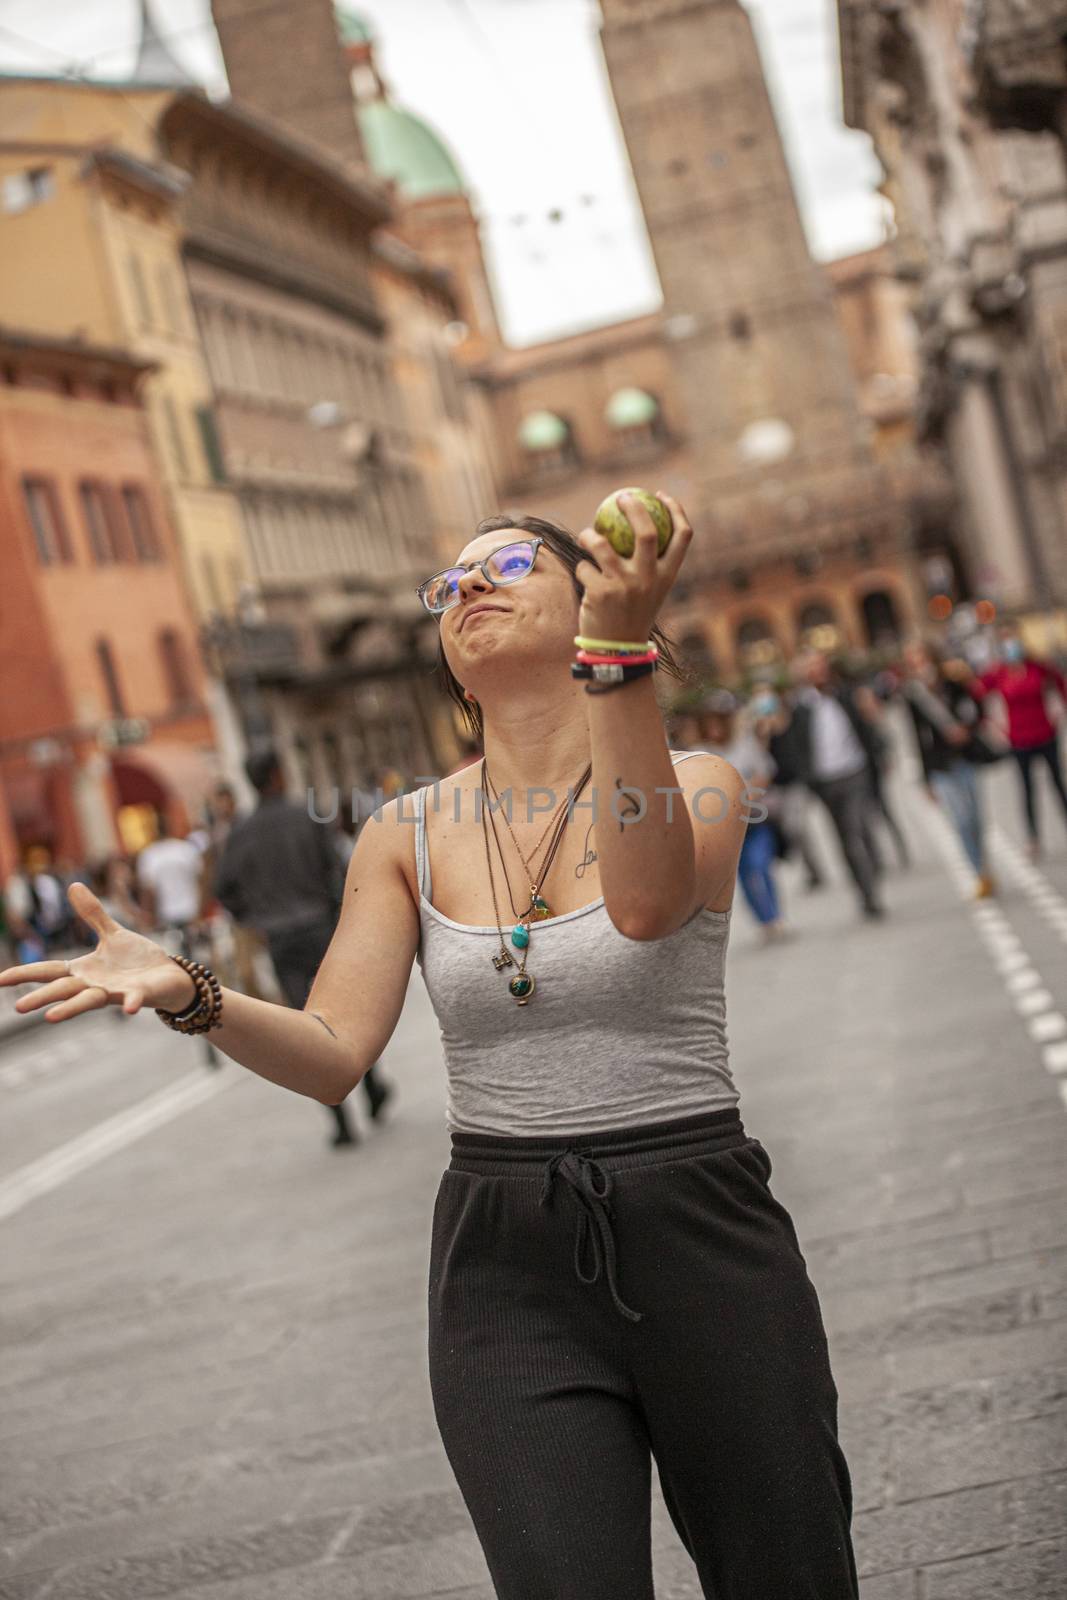 Street artist juggler in Bologna, Italy 23 by pippocarlot